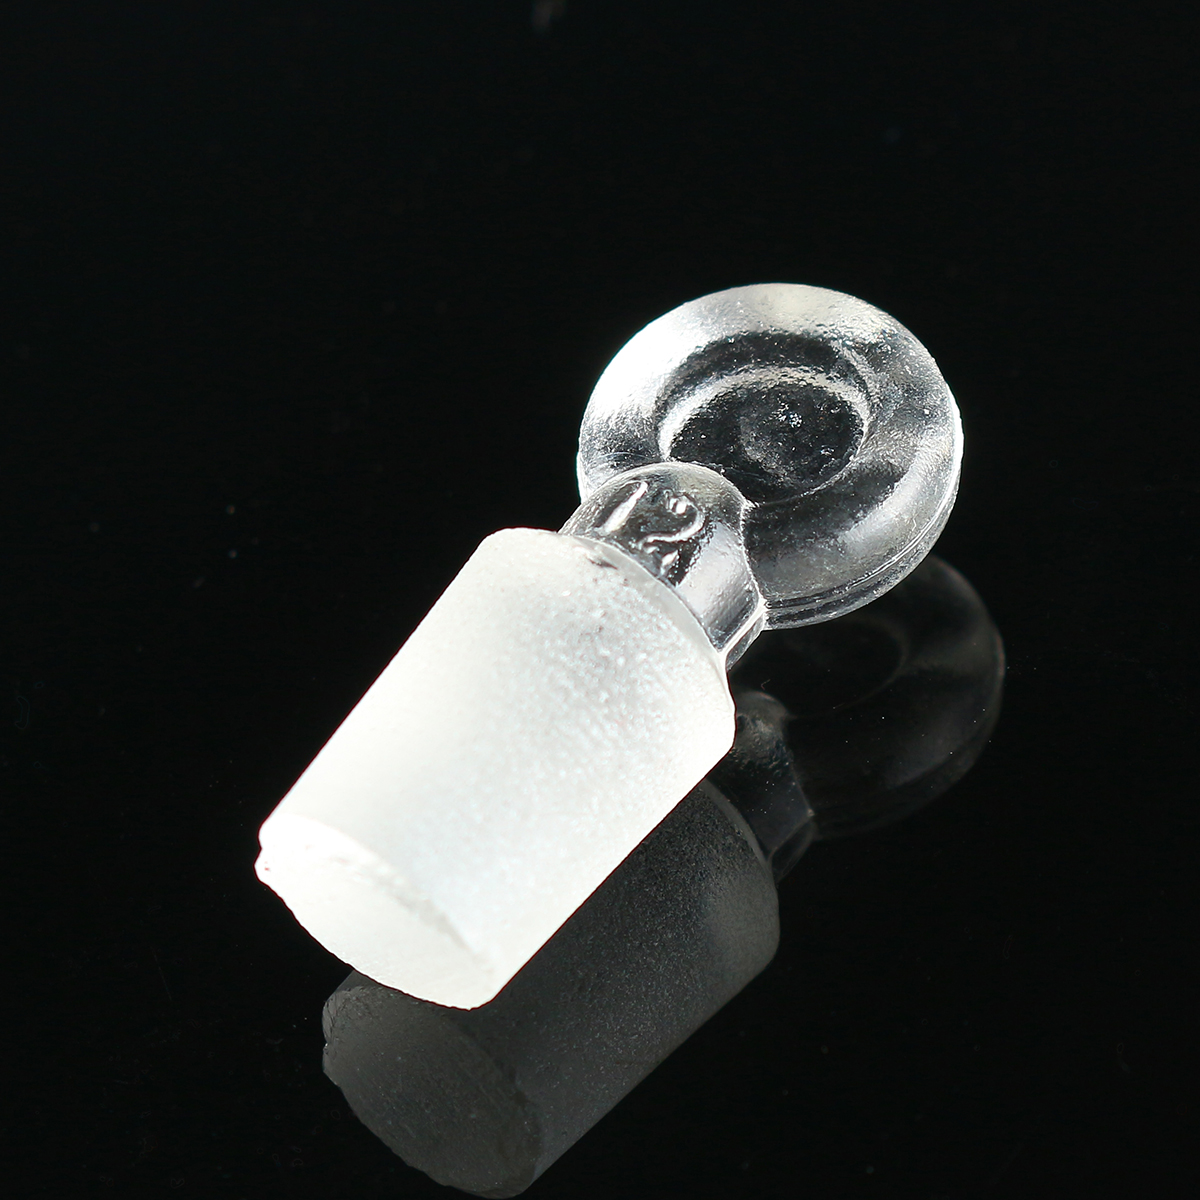 10/25/50/100/250ML Transparent Glass Volumetric Flask With Stopper Lab Glassware Kit